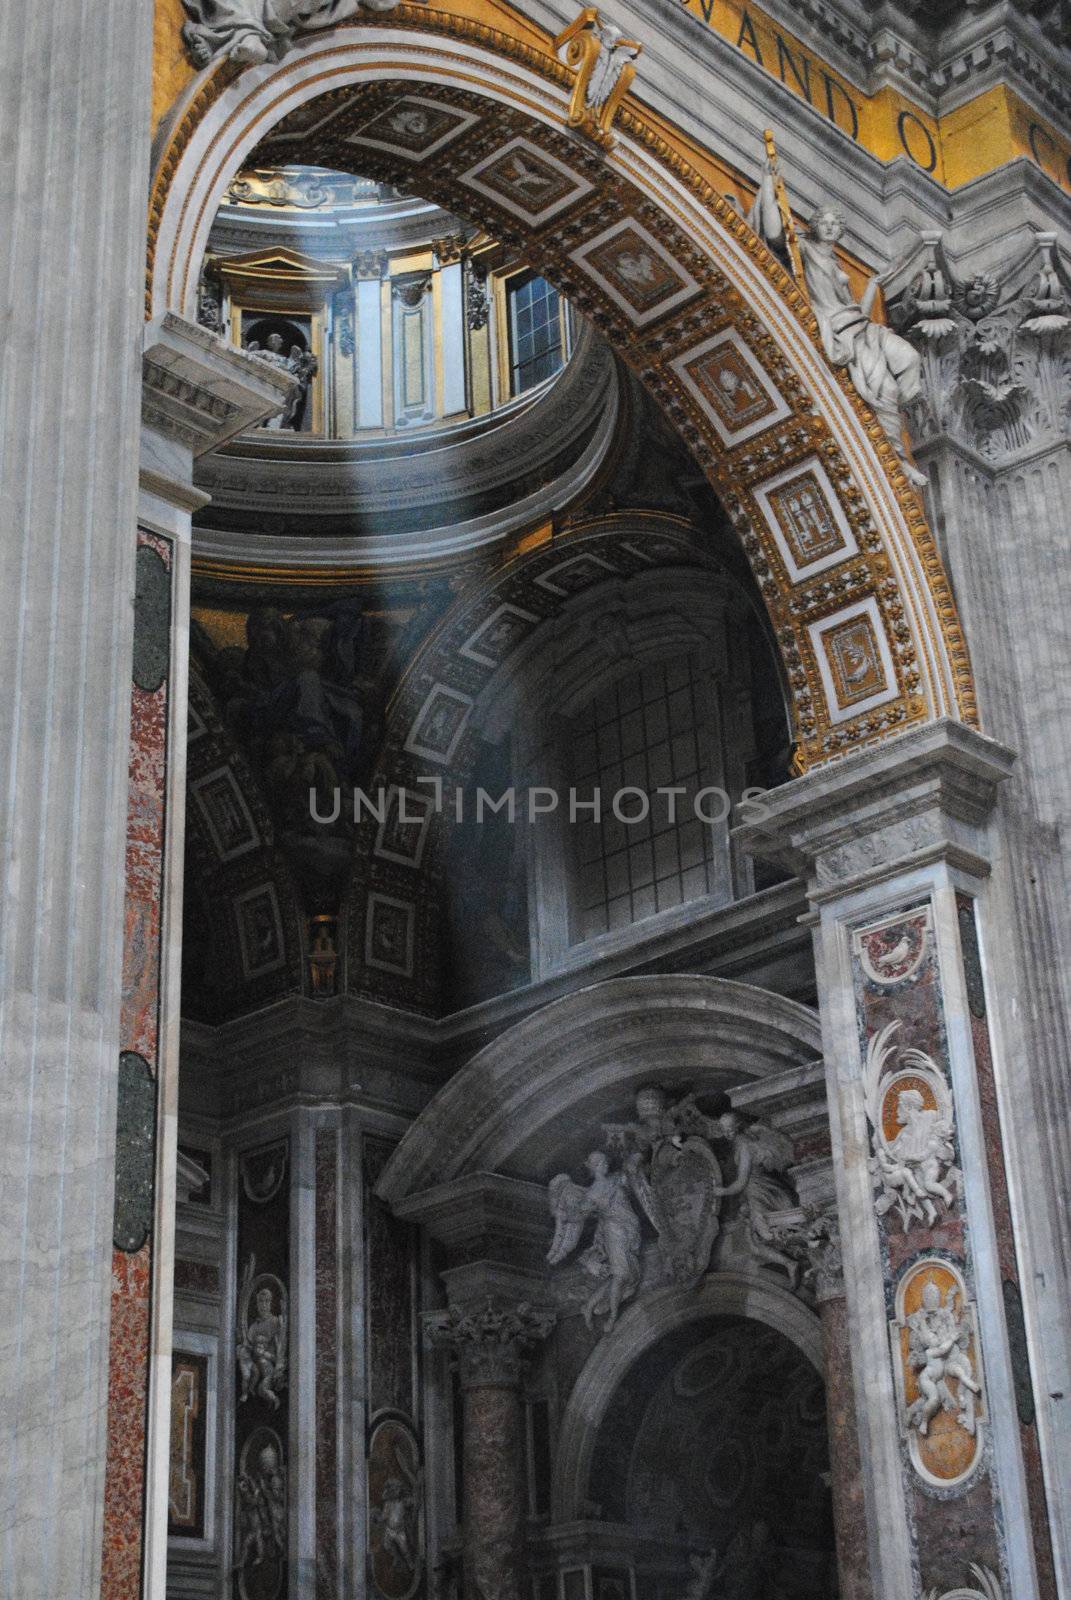 Inside of St. Peter's Basilica.